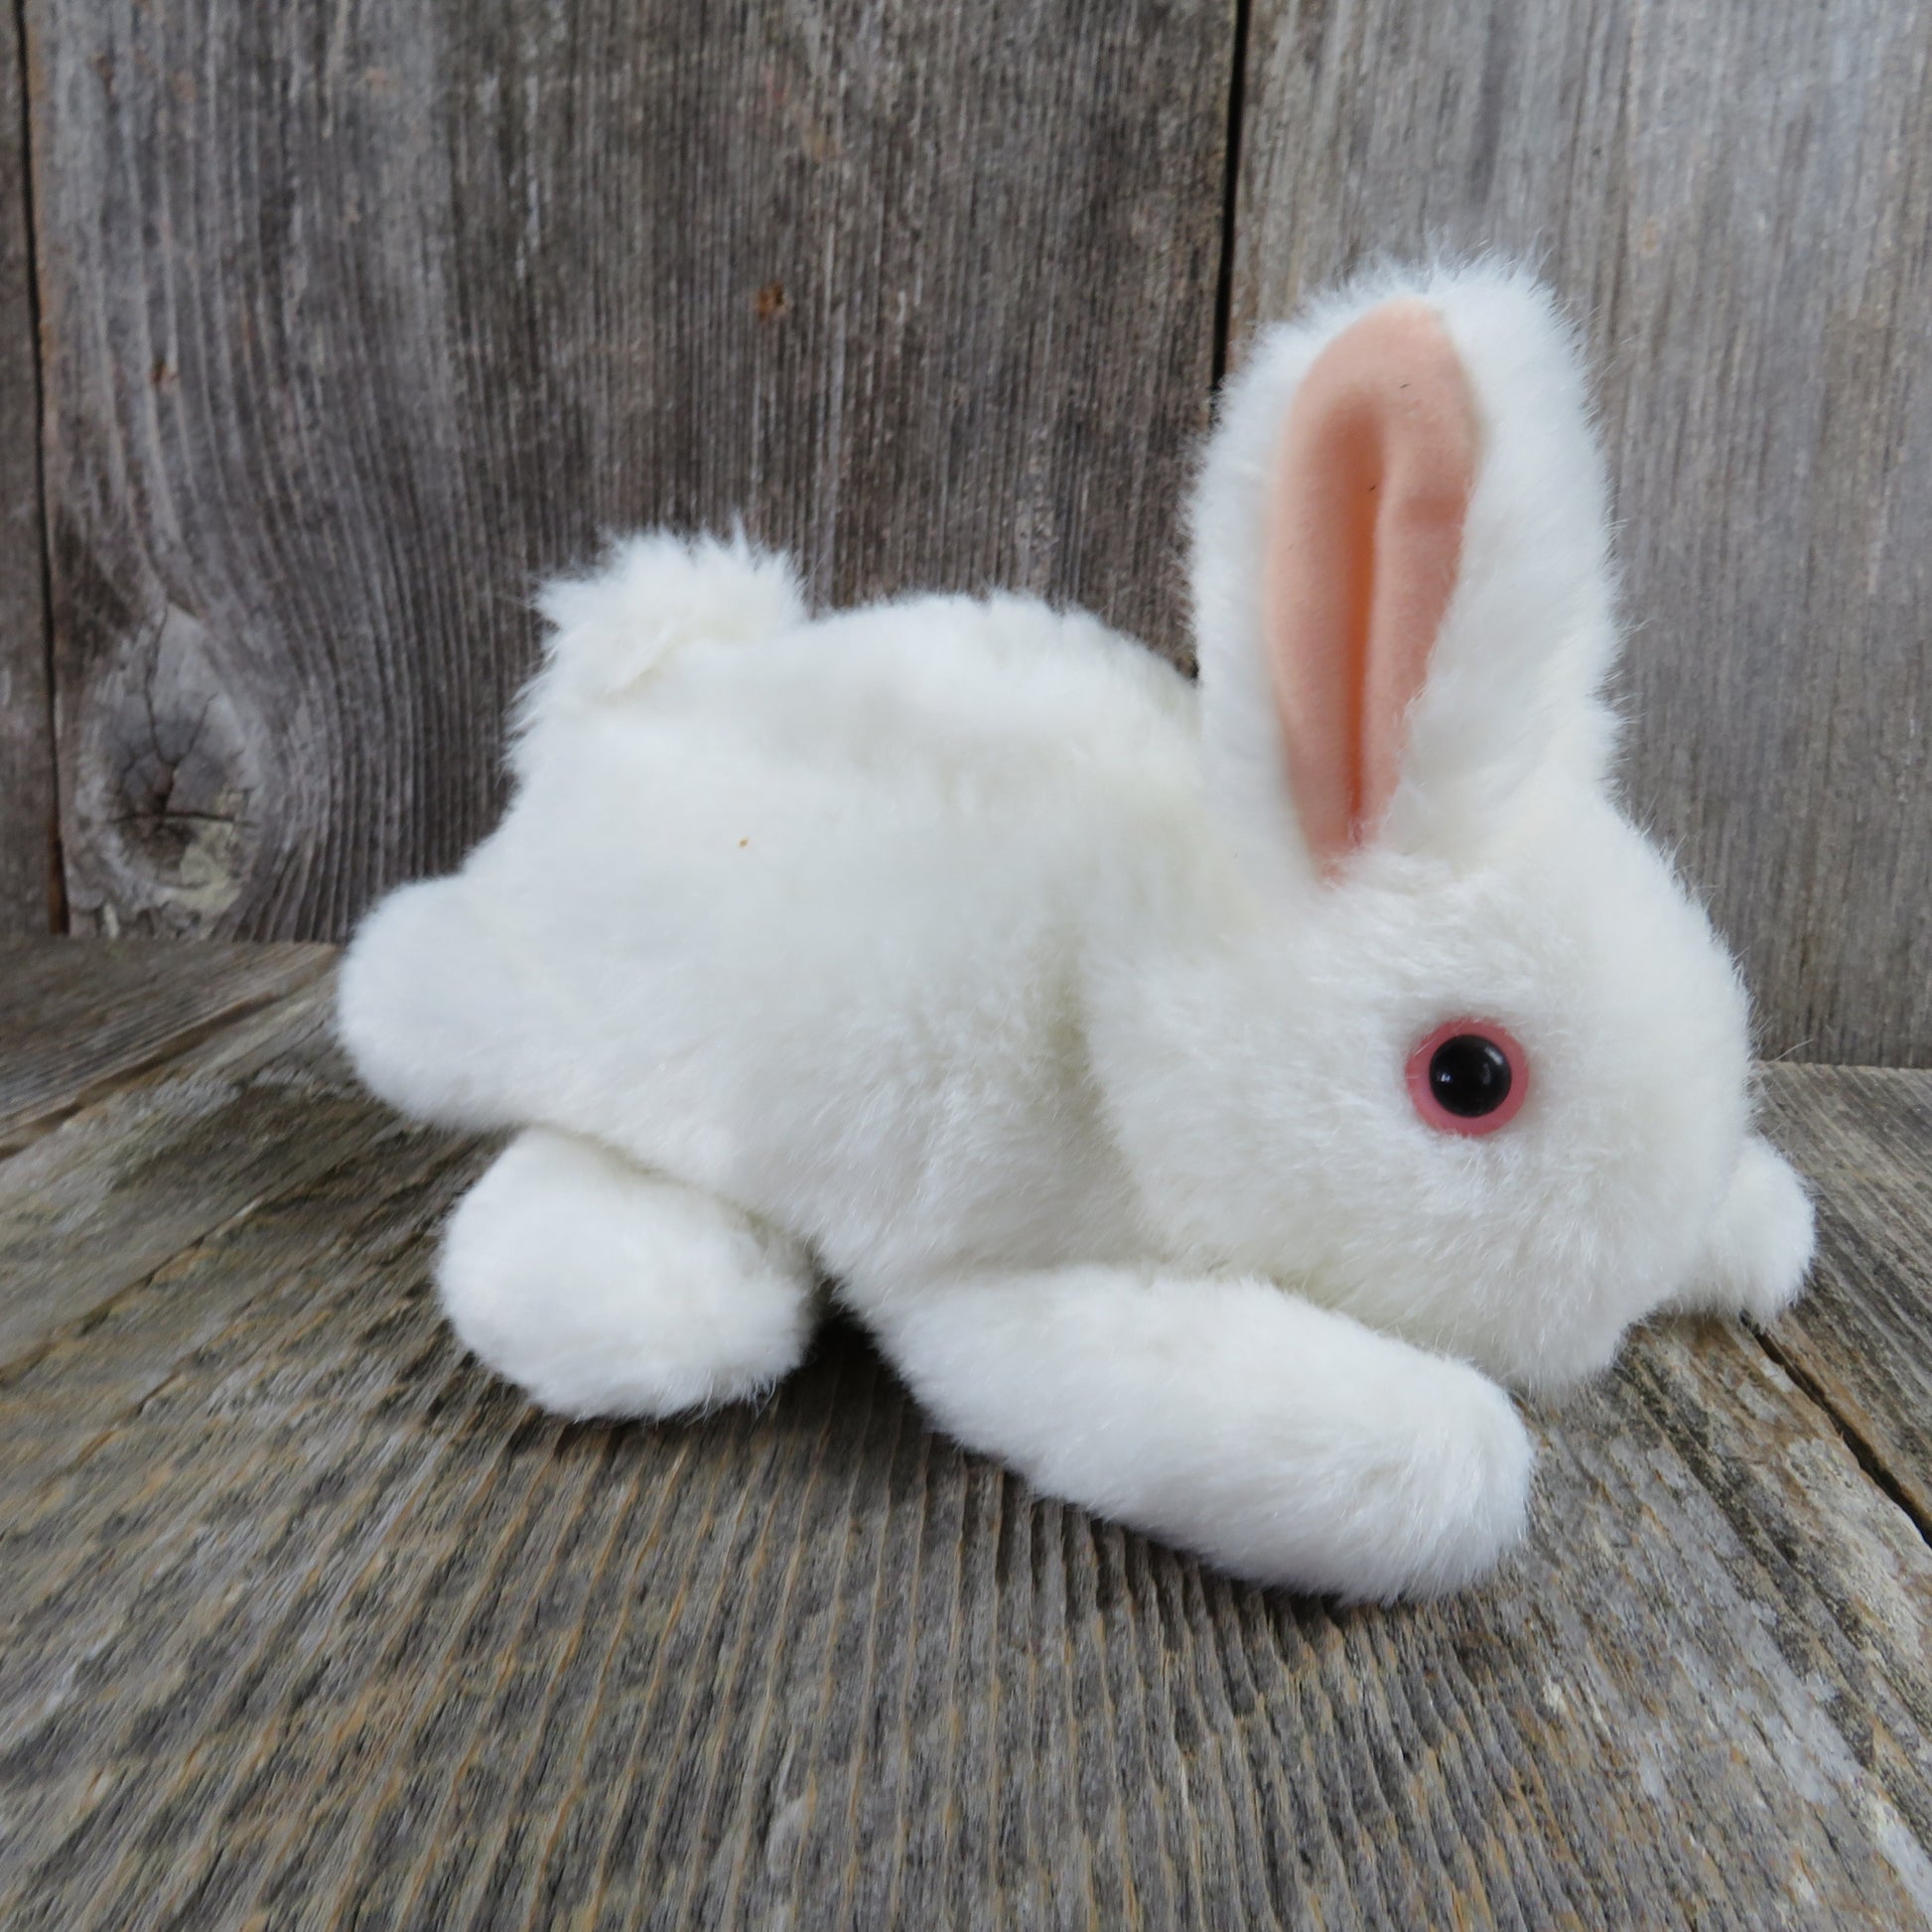 Bunny Rabbit Puppet Plush Folkmanis White Easter Glove Hand Stuffed Animal - At Grandma's Table